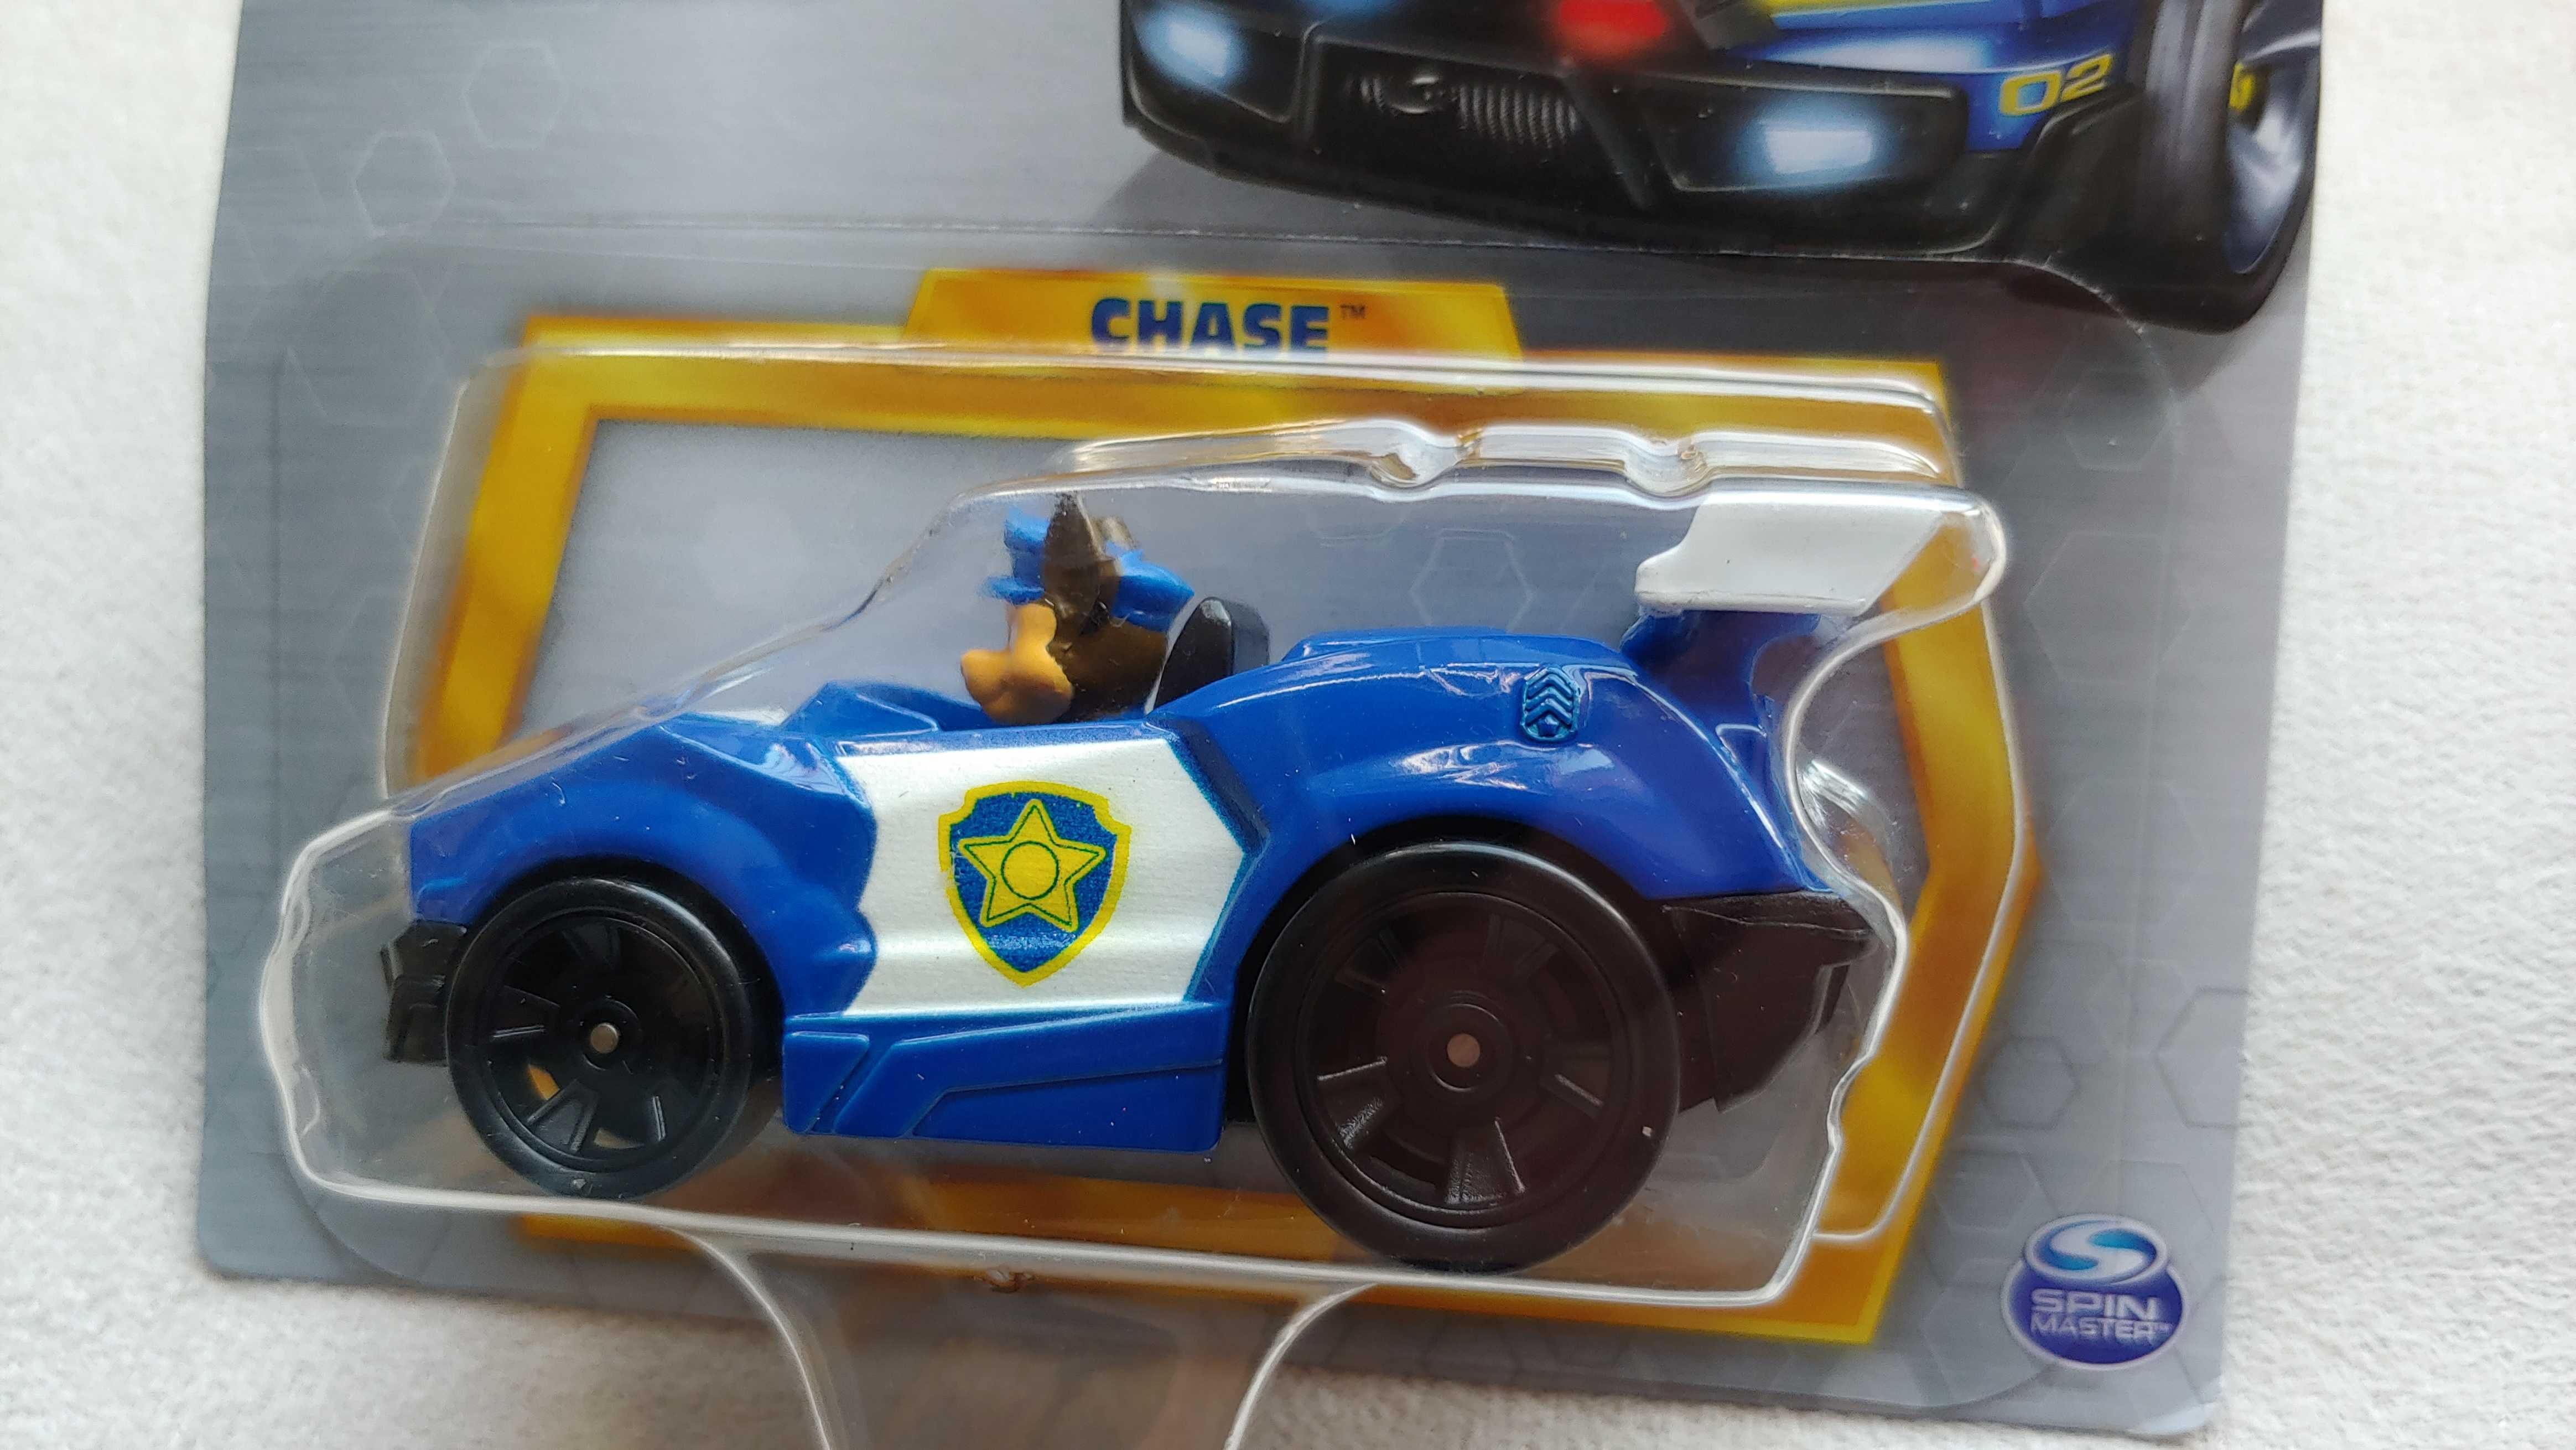 Psi Patrol, True Metal, Chase, pojazd